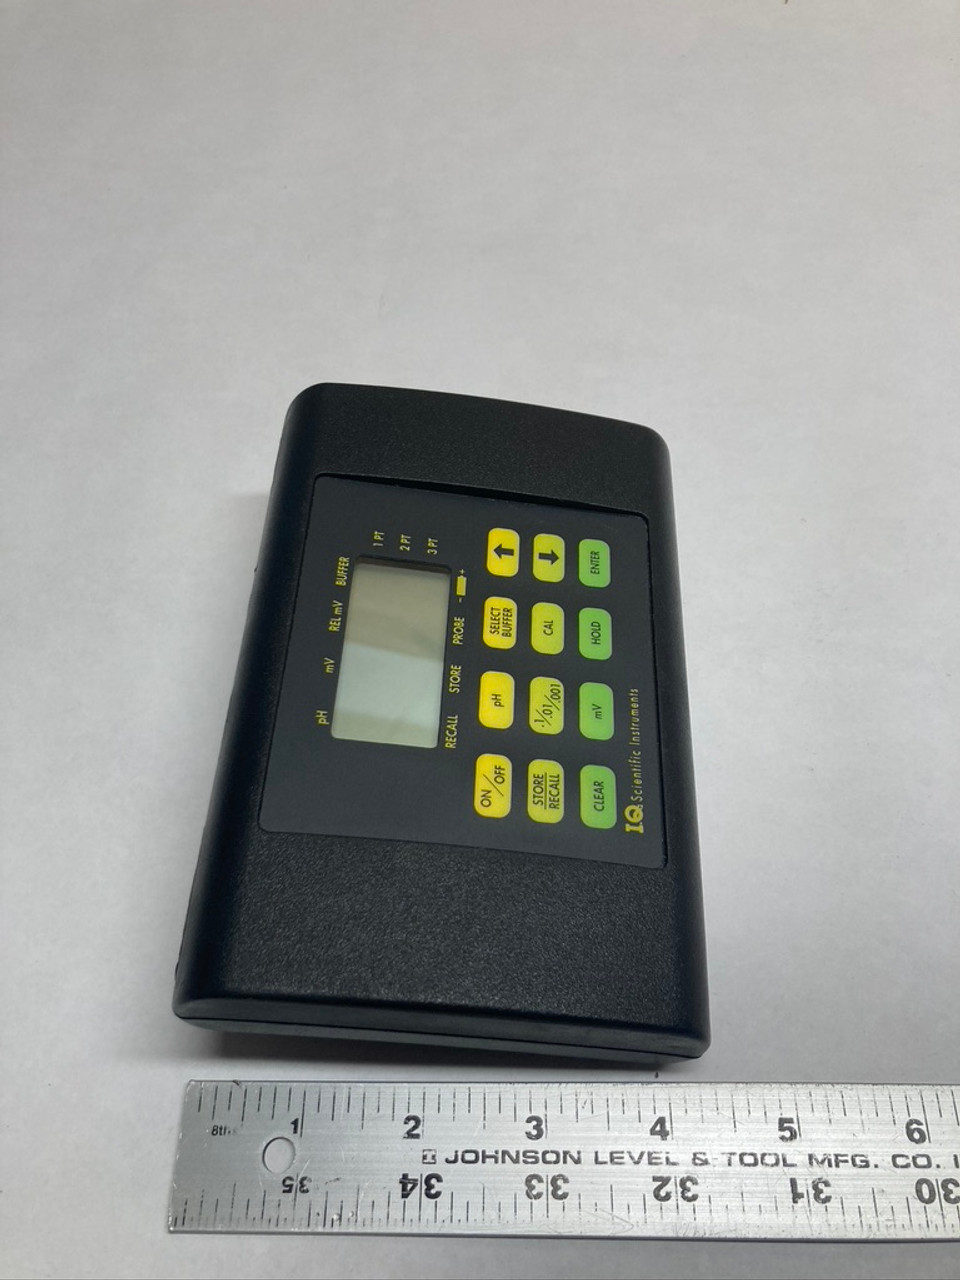 Portable PH Meter IQ240 IQ Scientific Instruments